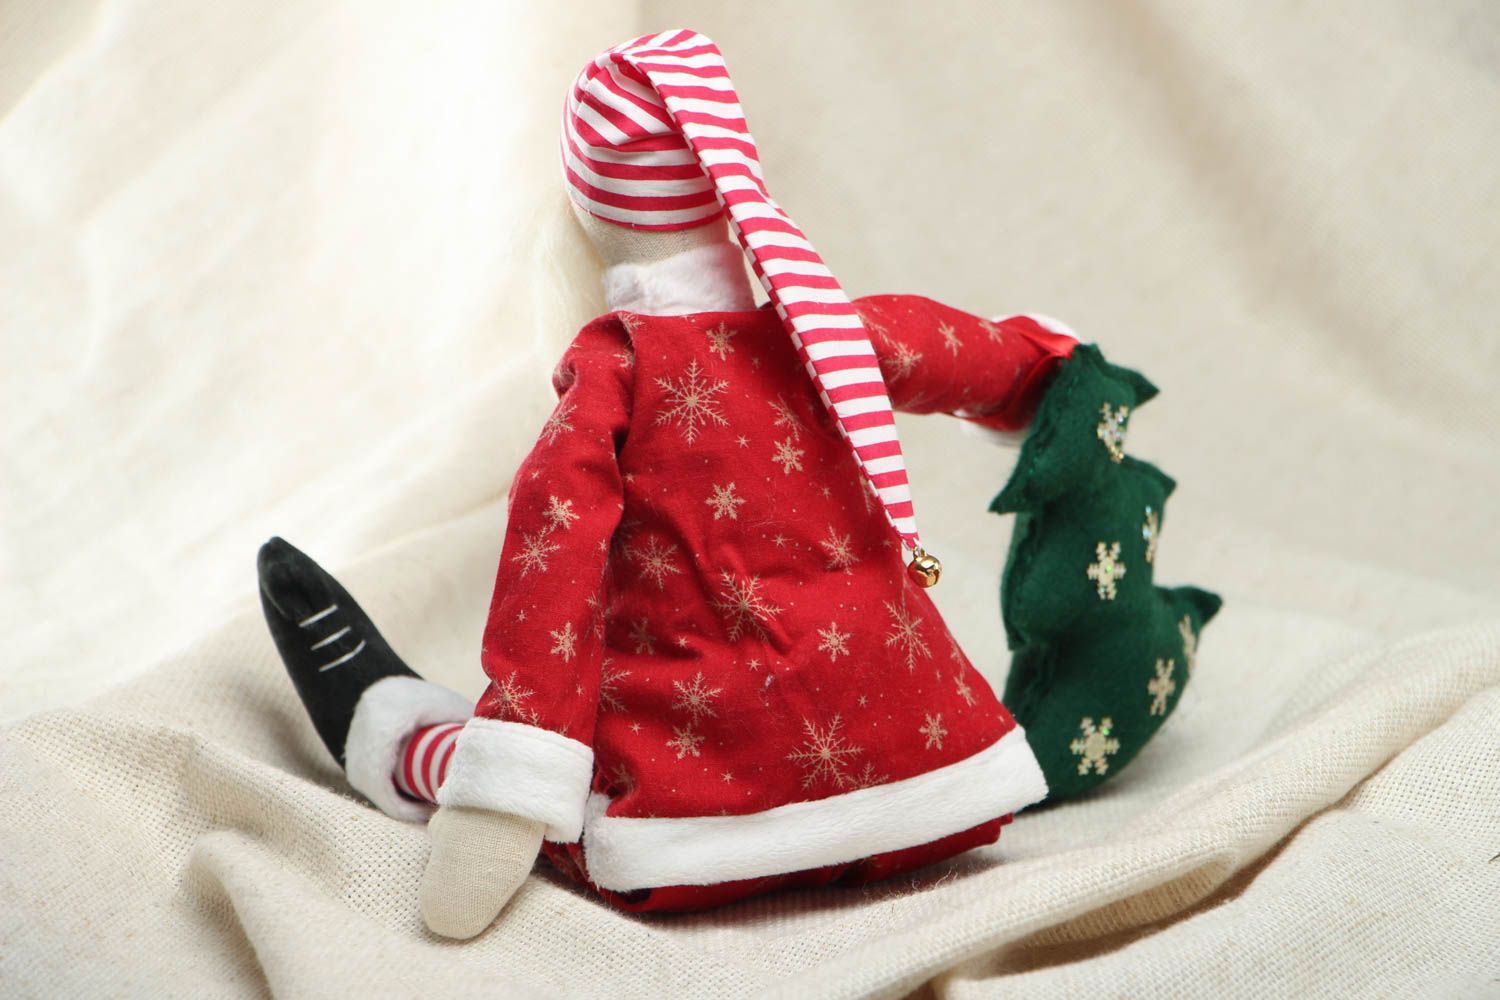 De brinquedo macio em forma de Papai Noel com árvore de Natal foto 3